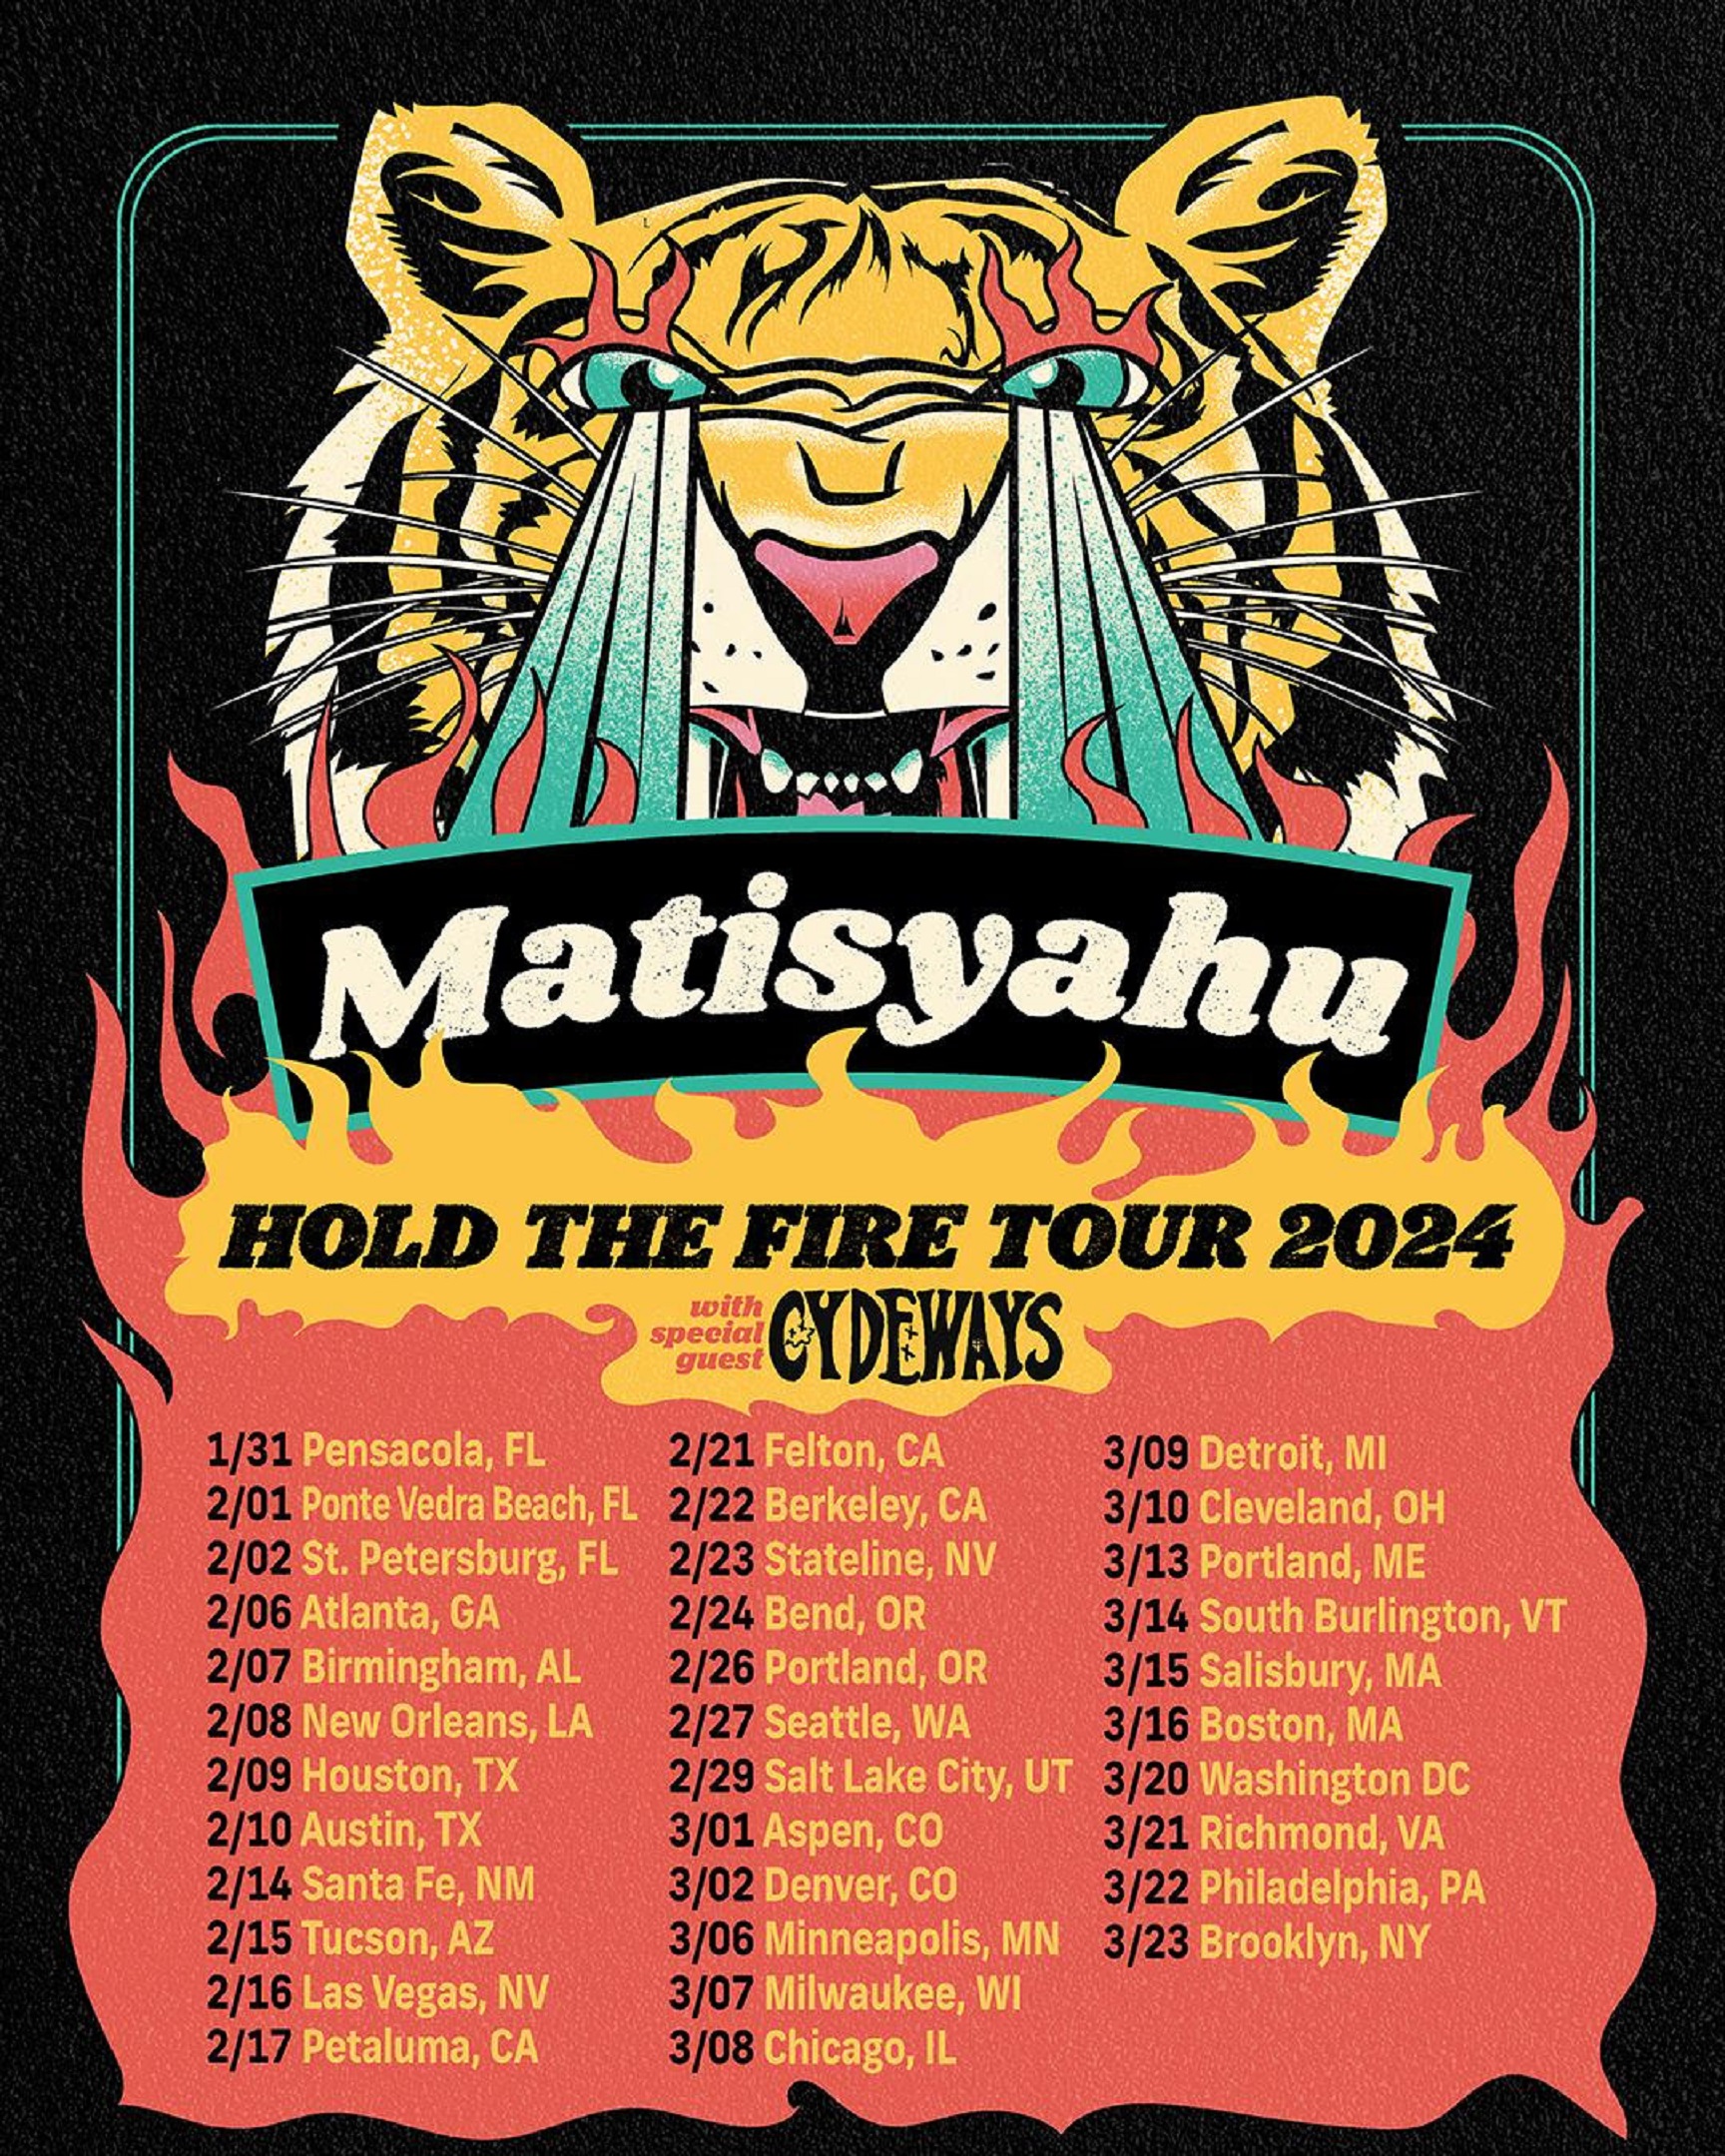 Matisyahu Announces Hold The Fire Tour 2024